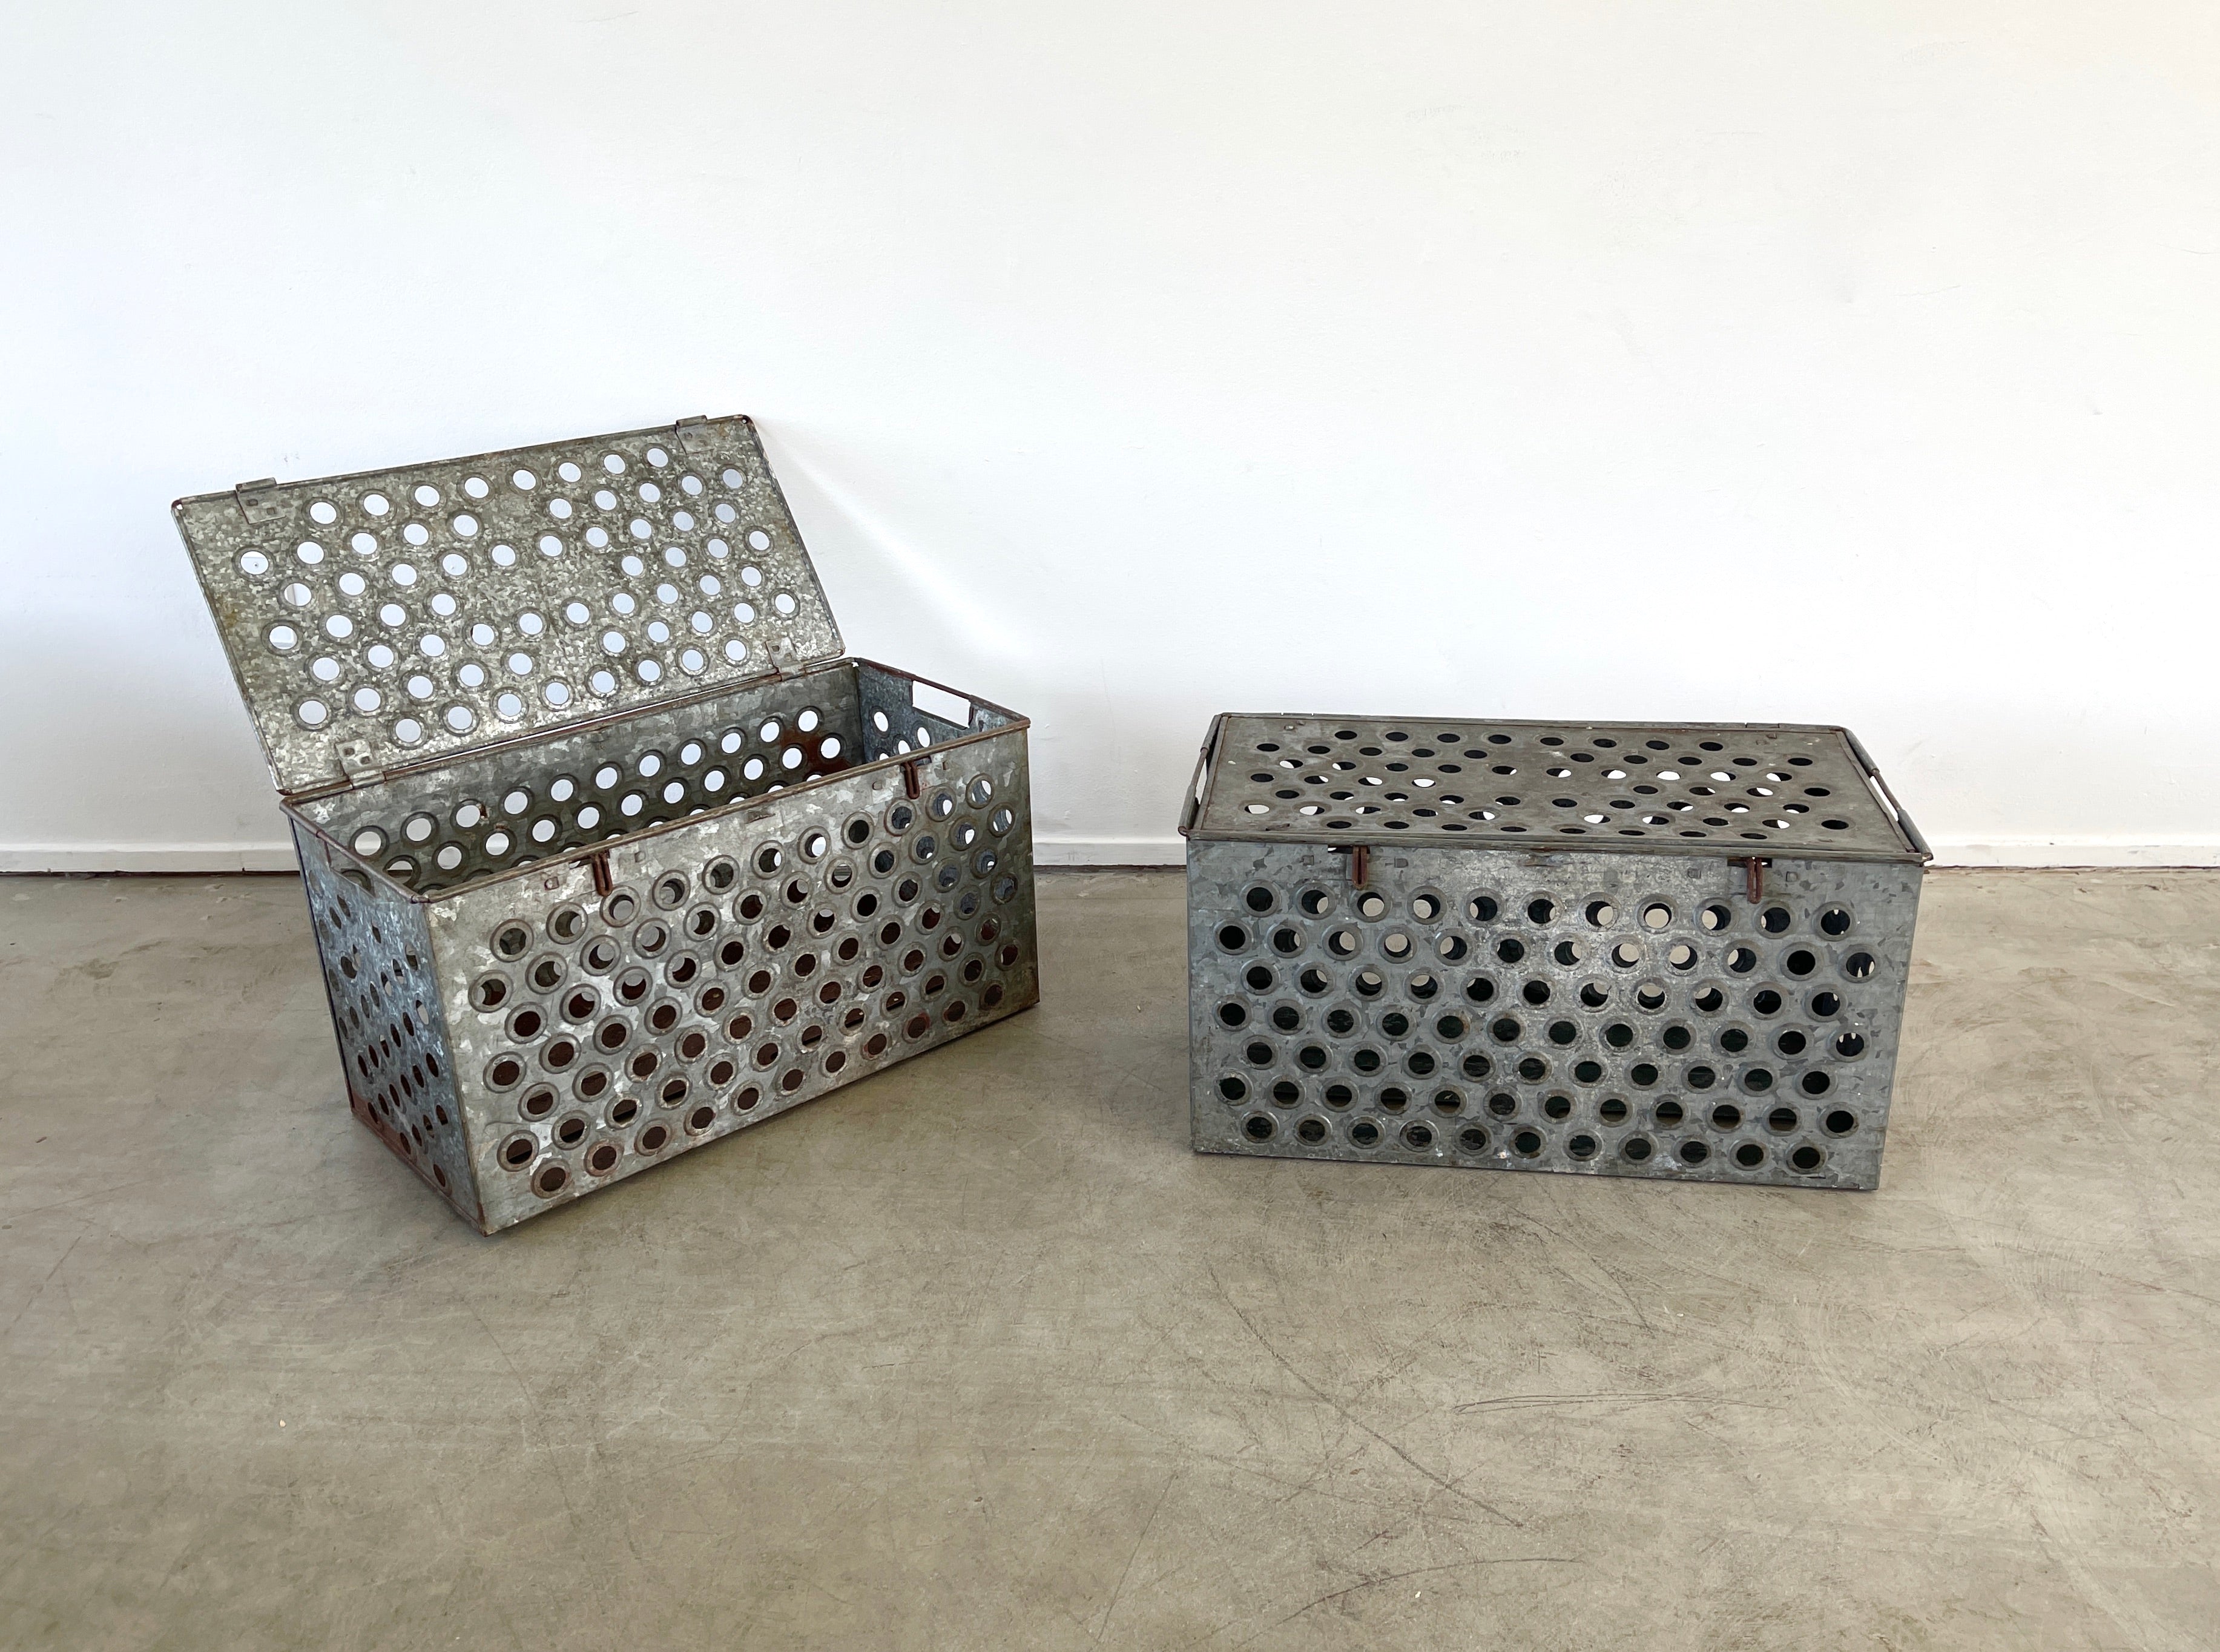 Perforated Metal Baskets